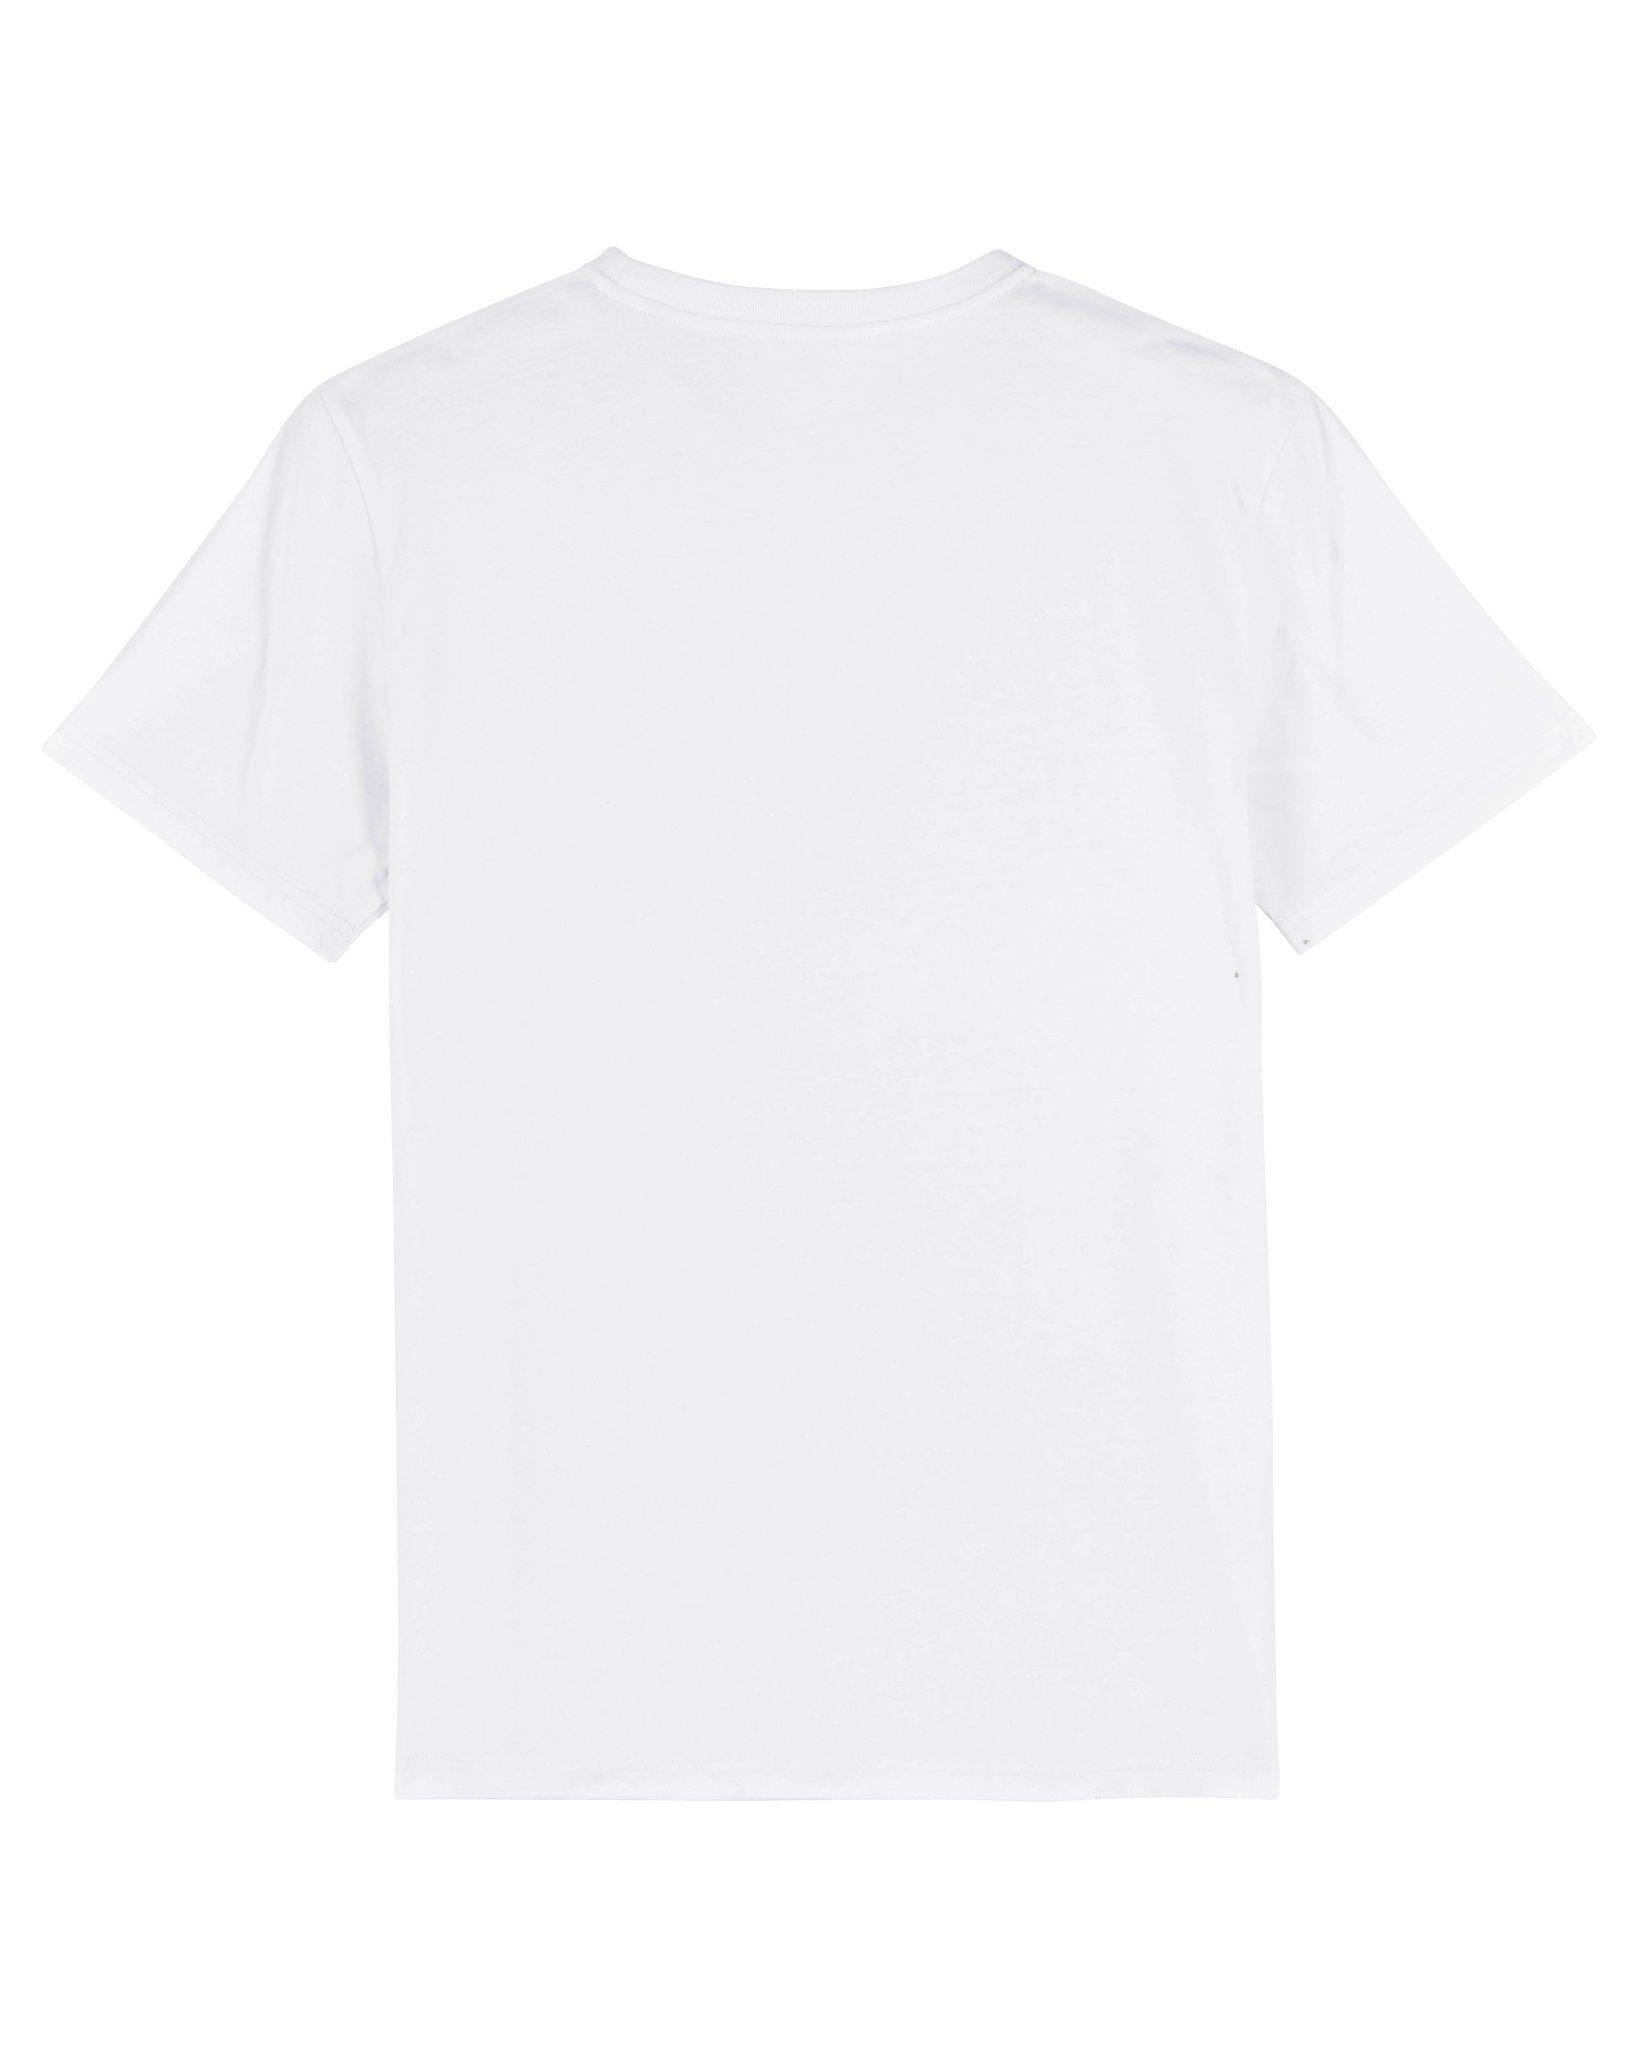 Organic T-Shirt BUCHSTABE C | unisex | small print - Studio Schön®